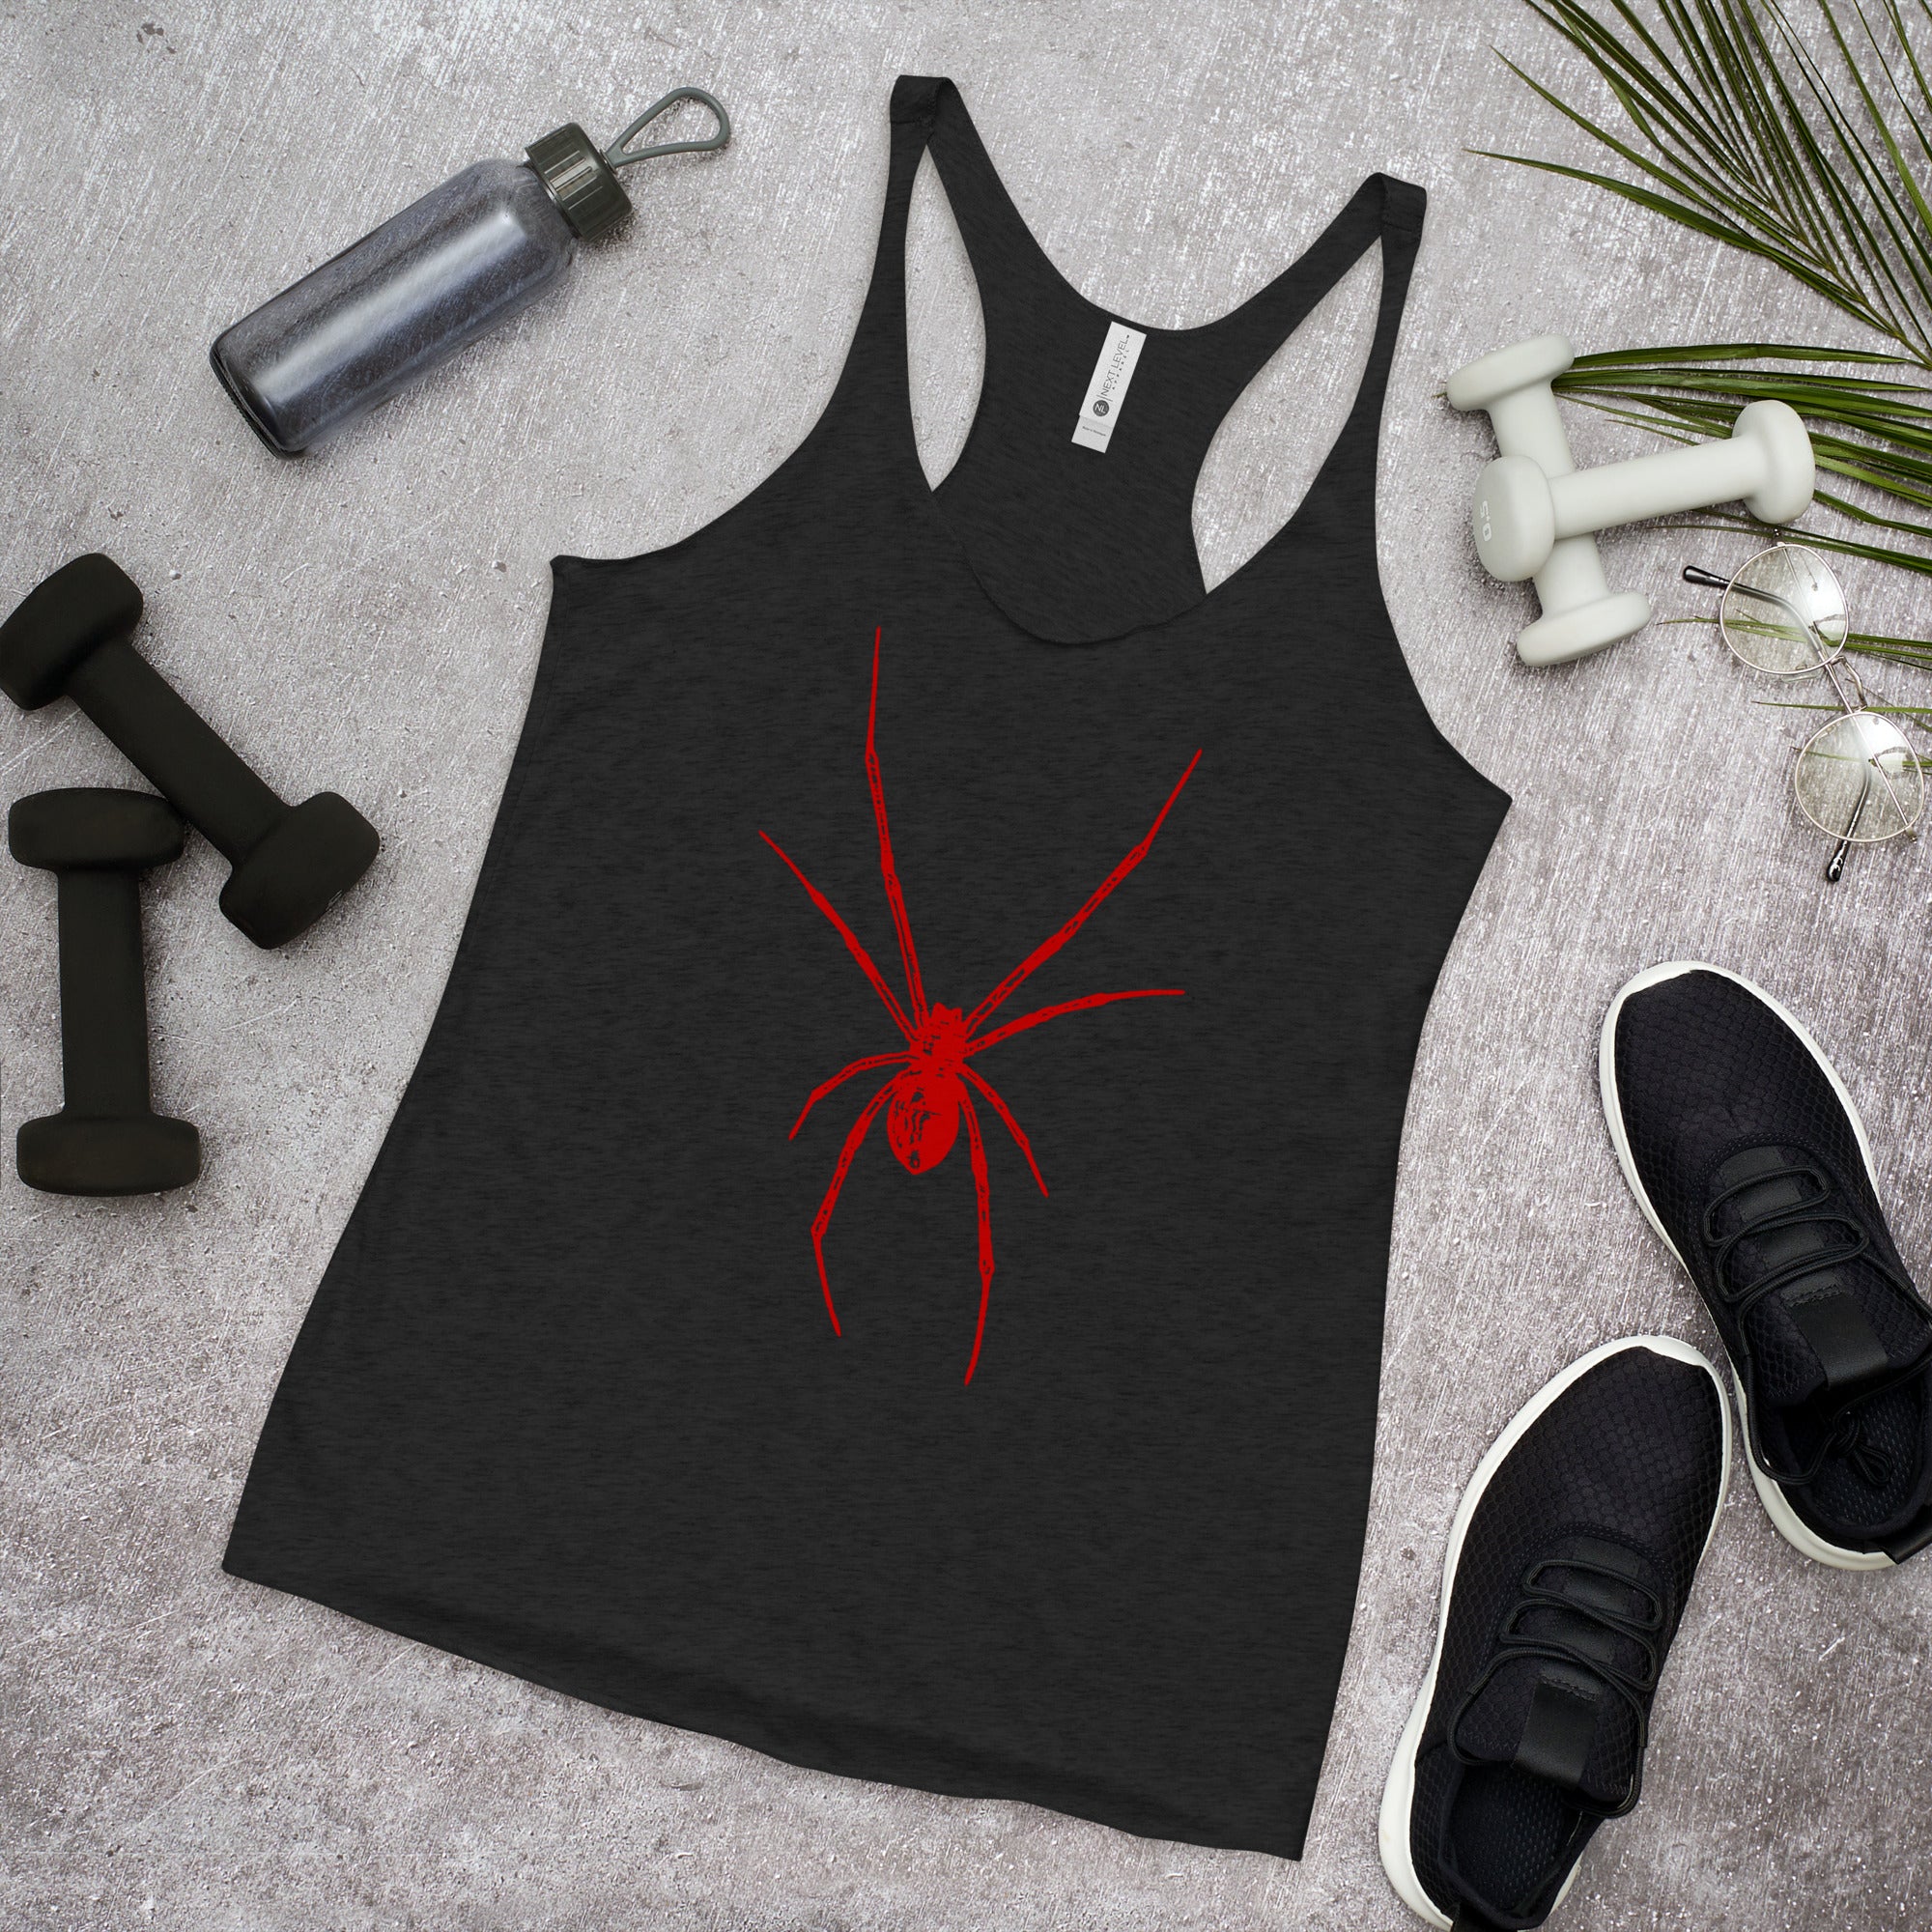 Red Creepy Spider Arachnid Black Widow Women's Racerback Tank Top Shirt - Edge of Life Designs